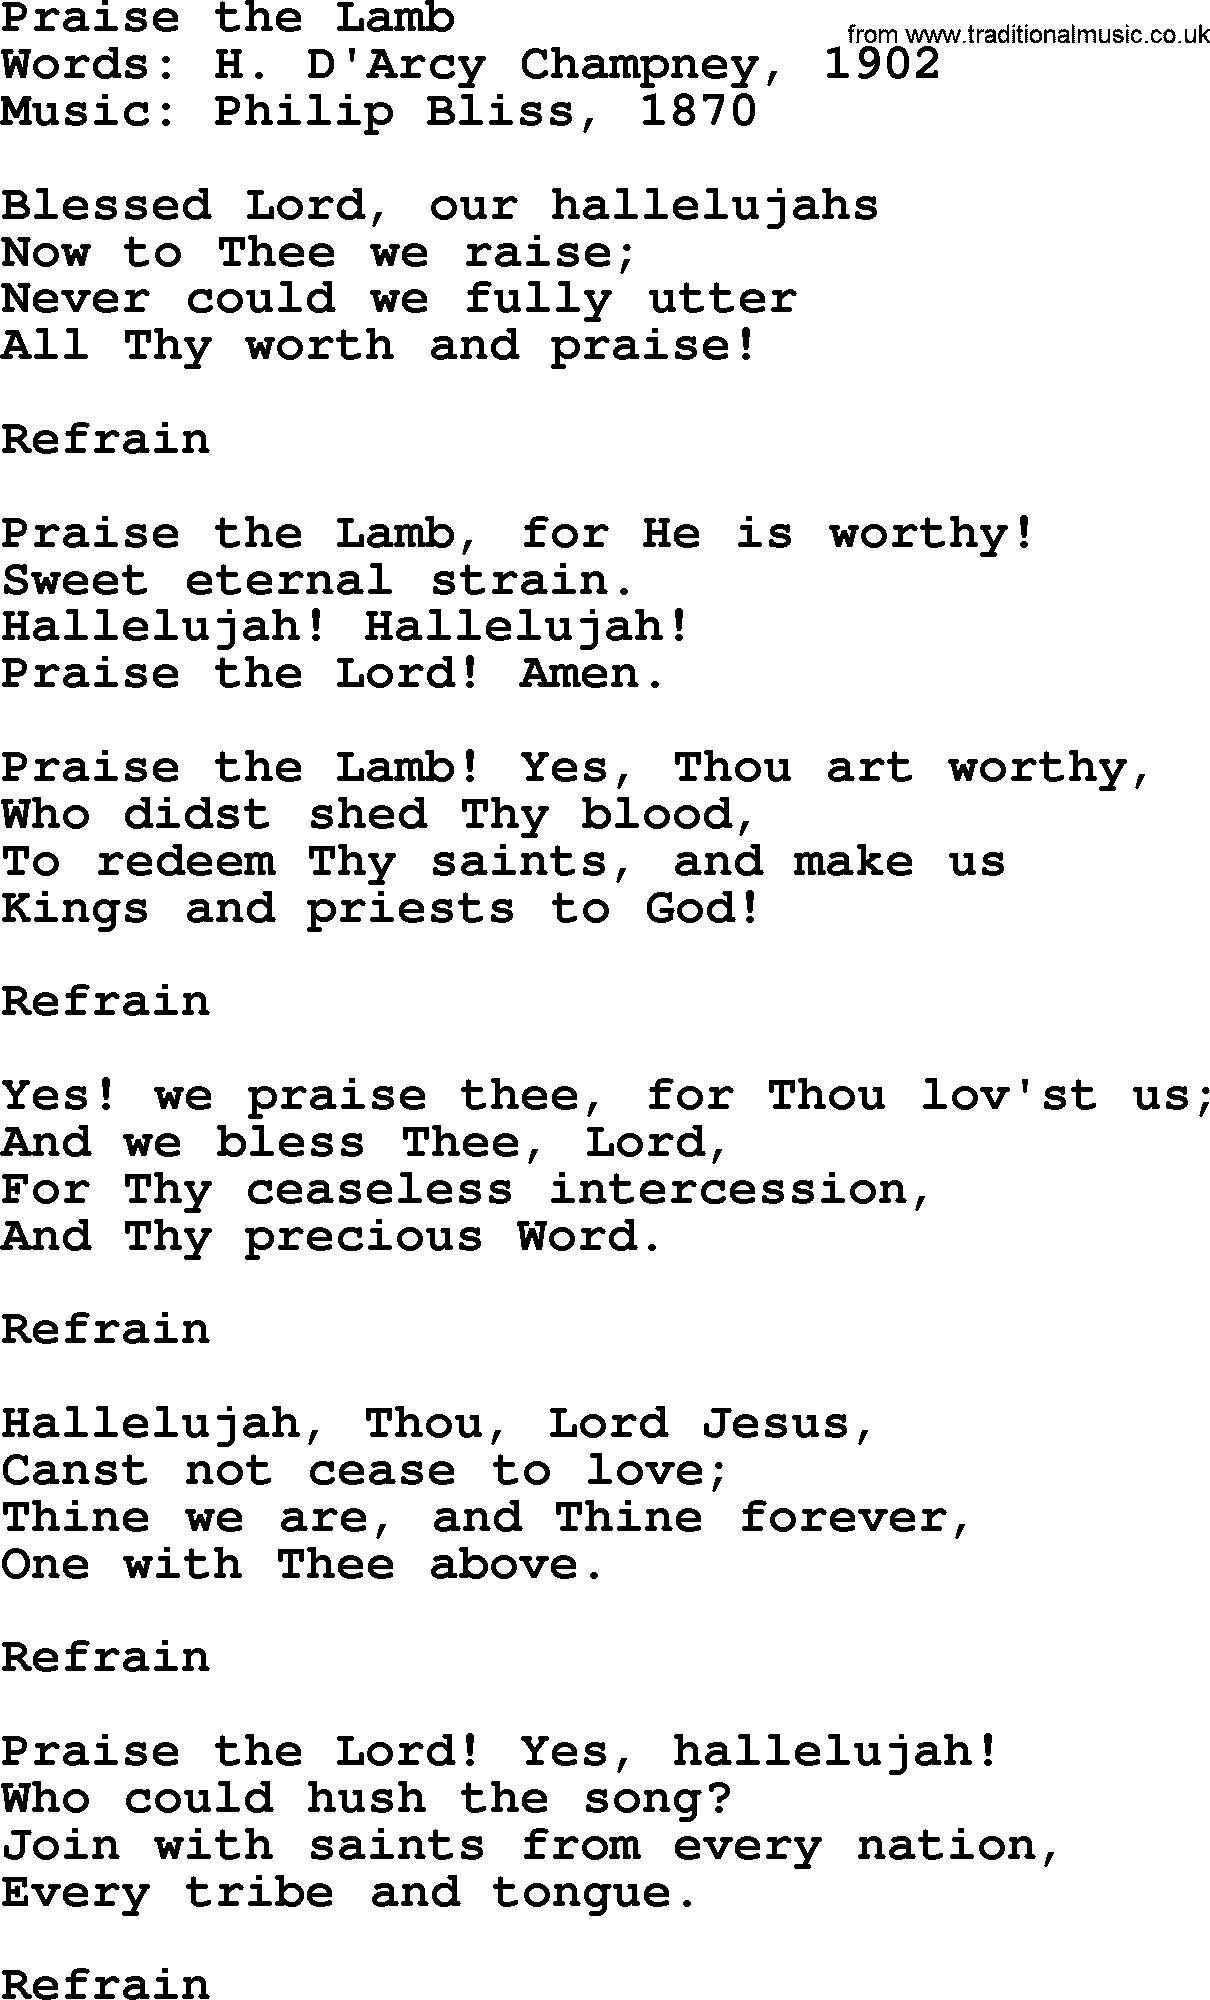 Lion and the lamb lyrics pdf